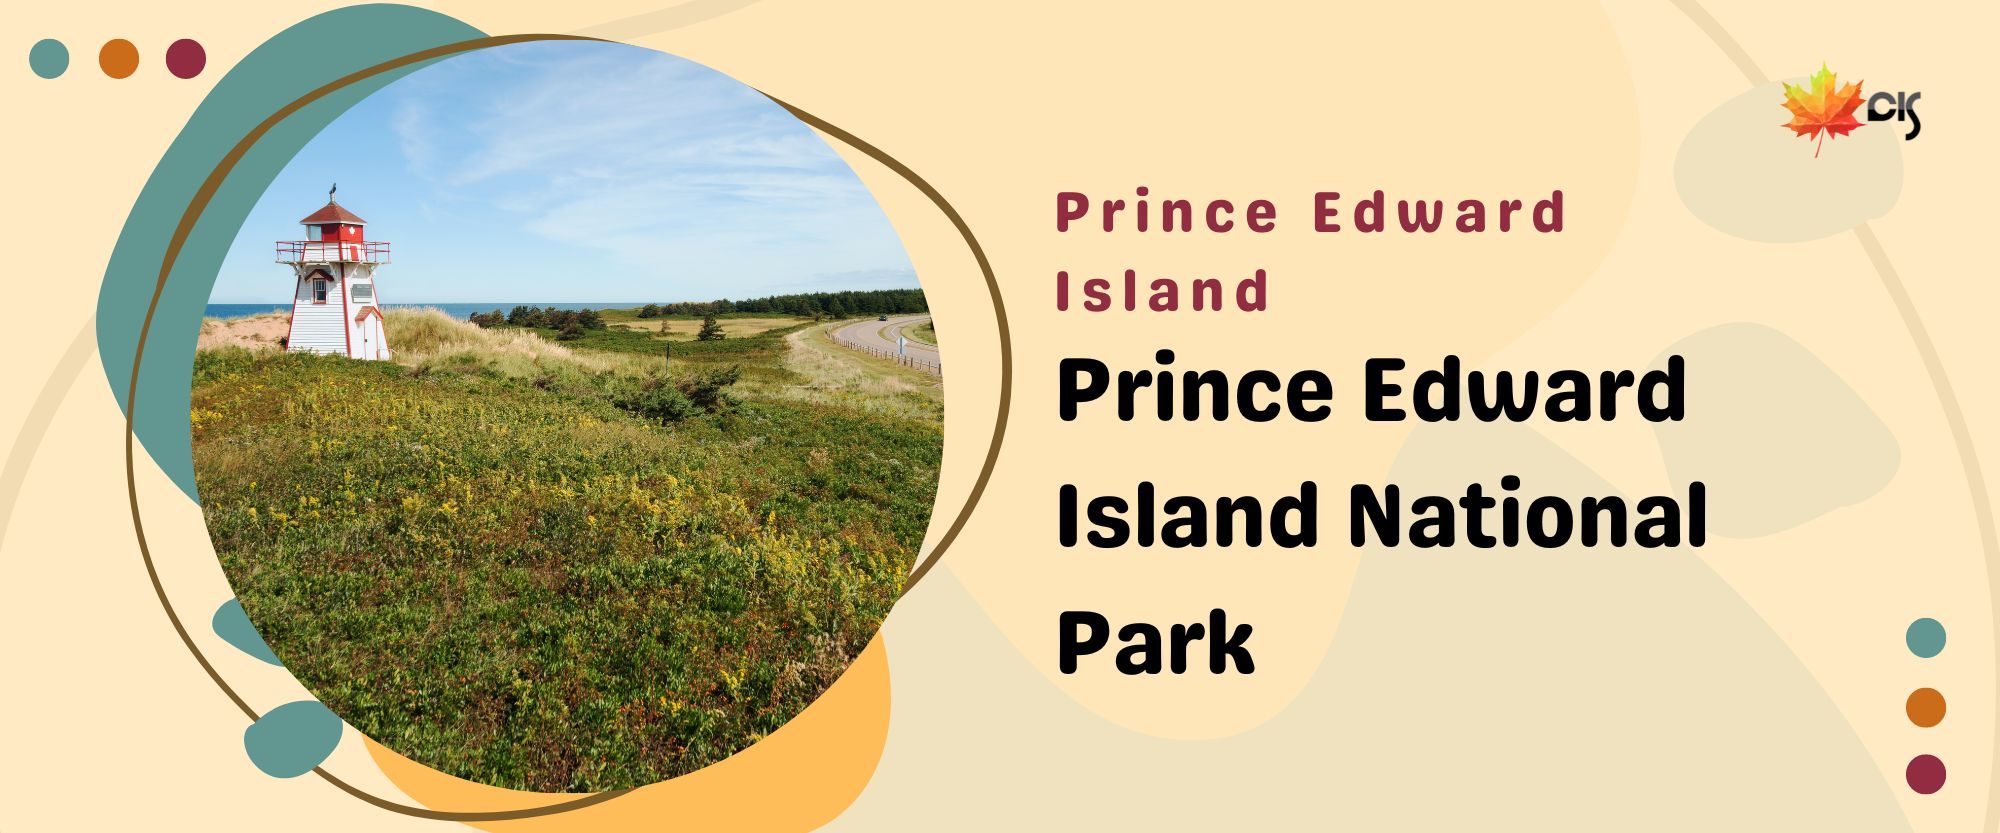 Prince Edward Island National Park